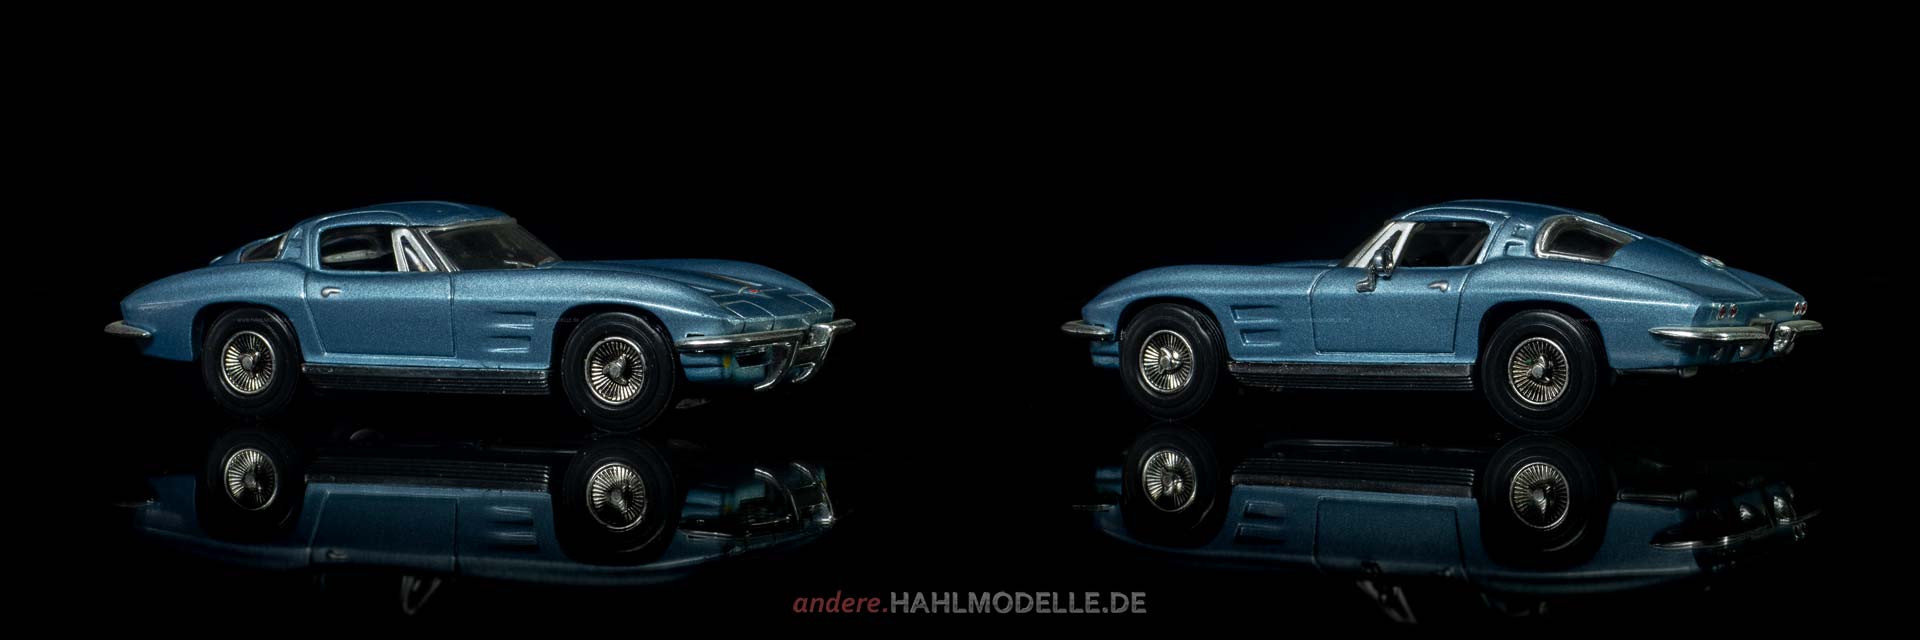 Corvette C2 „Sting Ray“ | Coupé | Ixo (Del Prado Car Collection) | 1:43 | www.andere.hahlmodelle.de